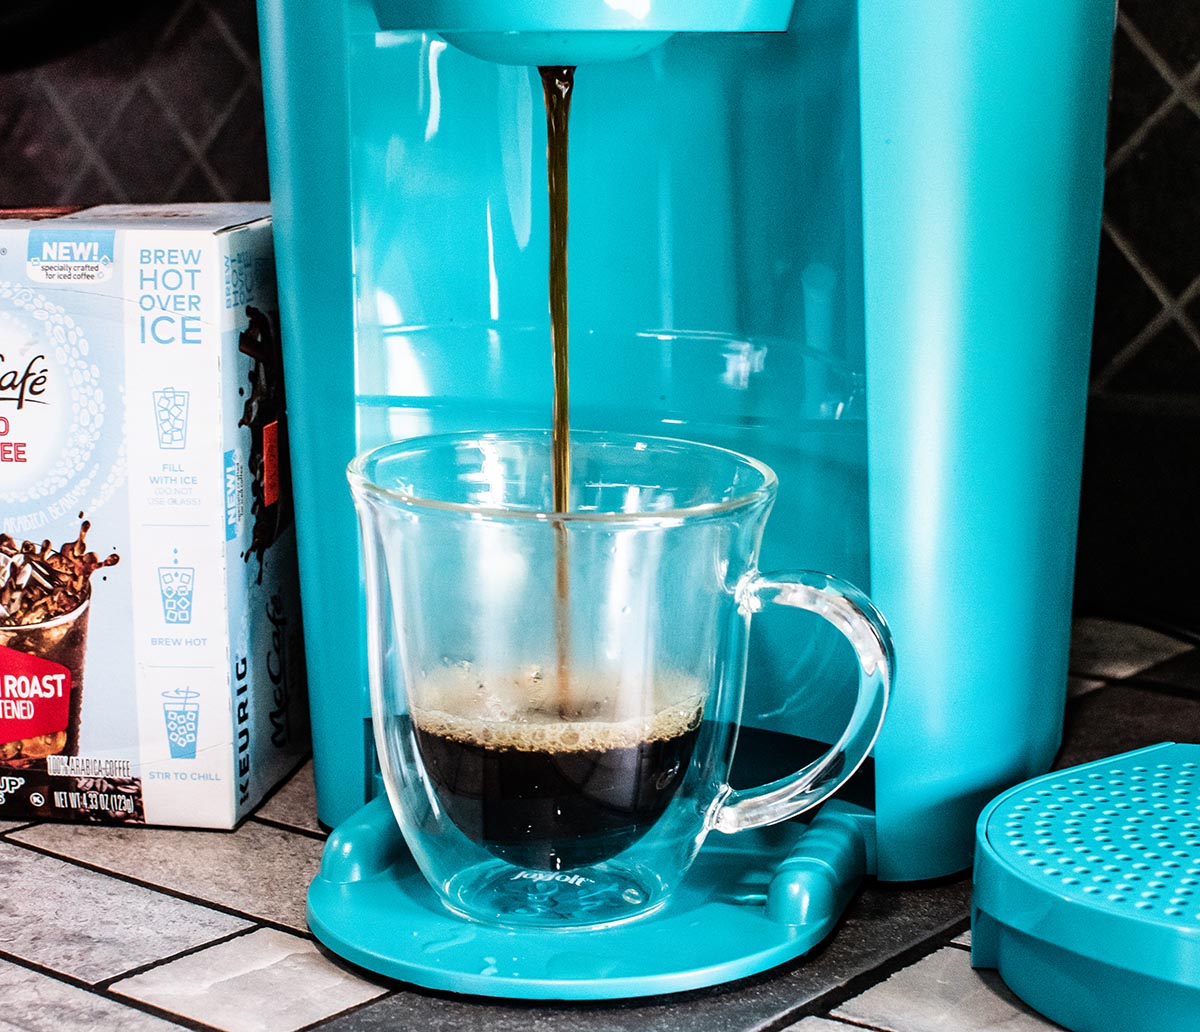 Keurig K-Compact Coffee Maker Review